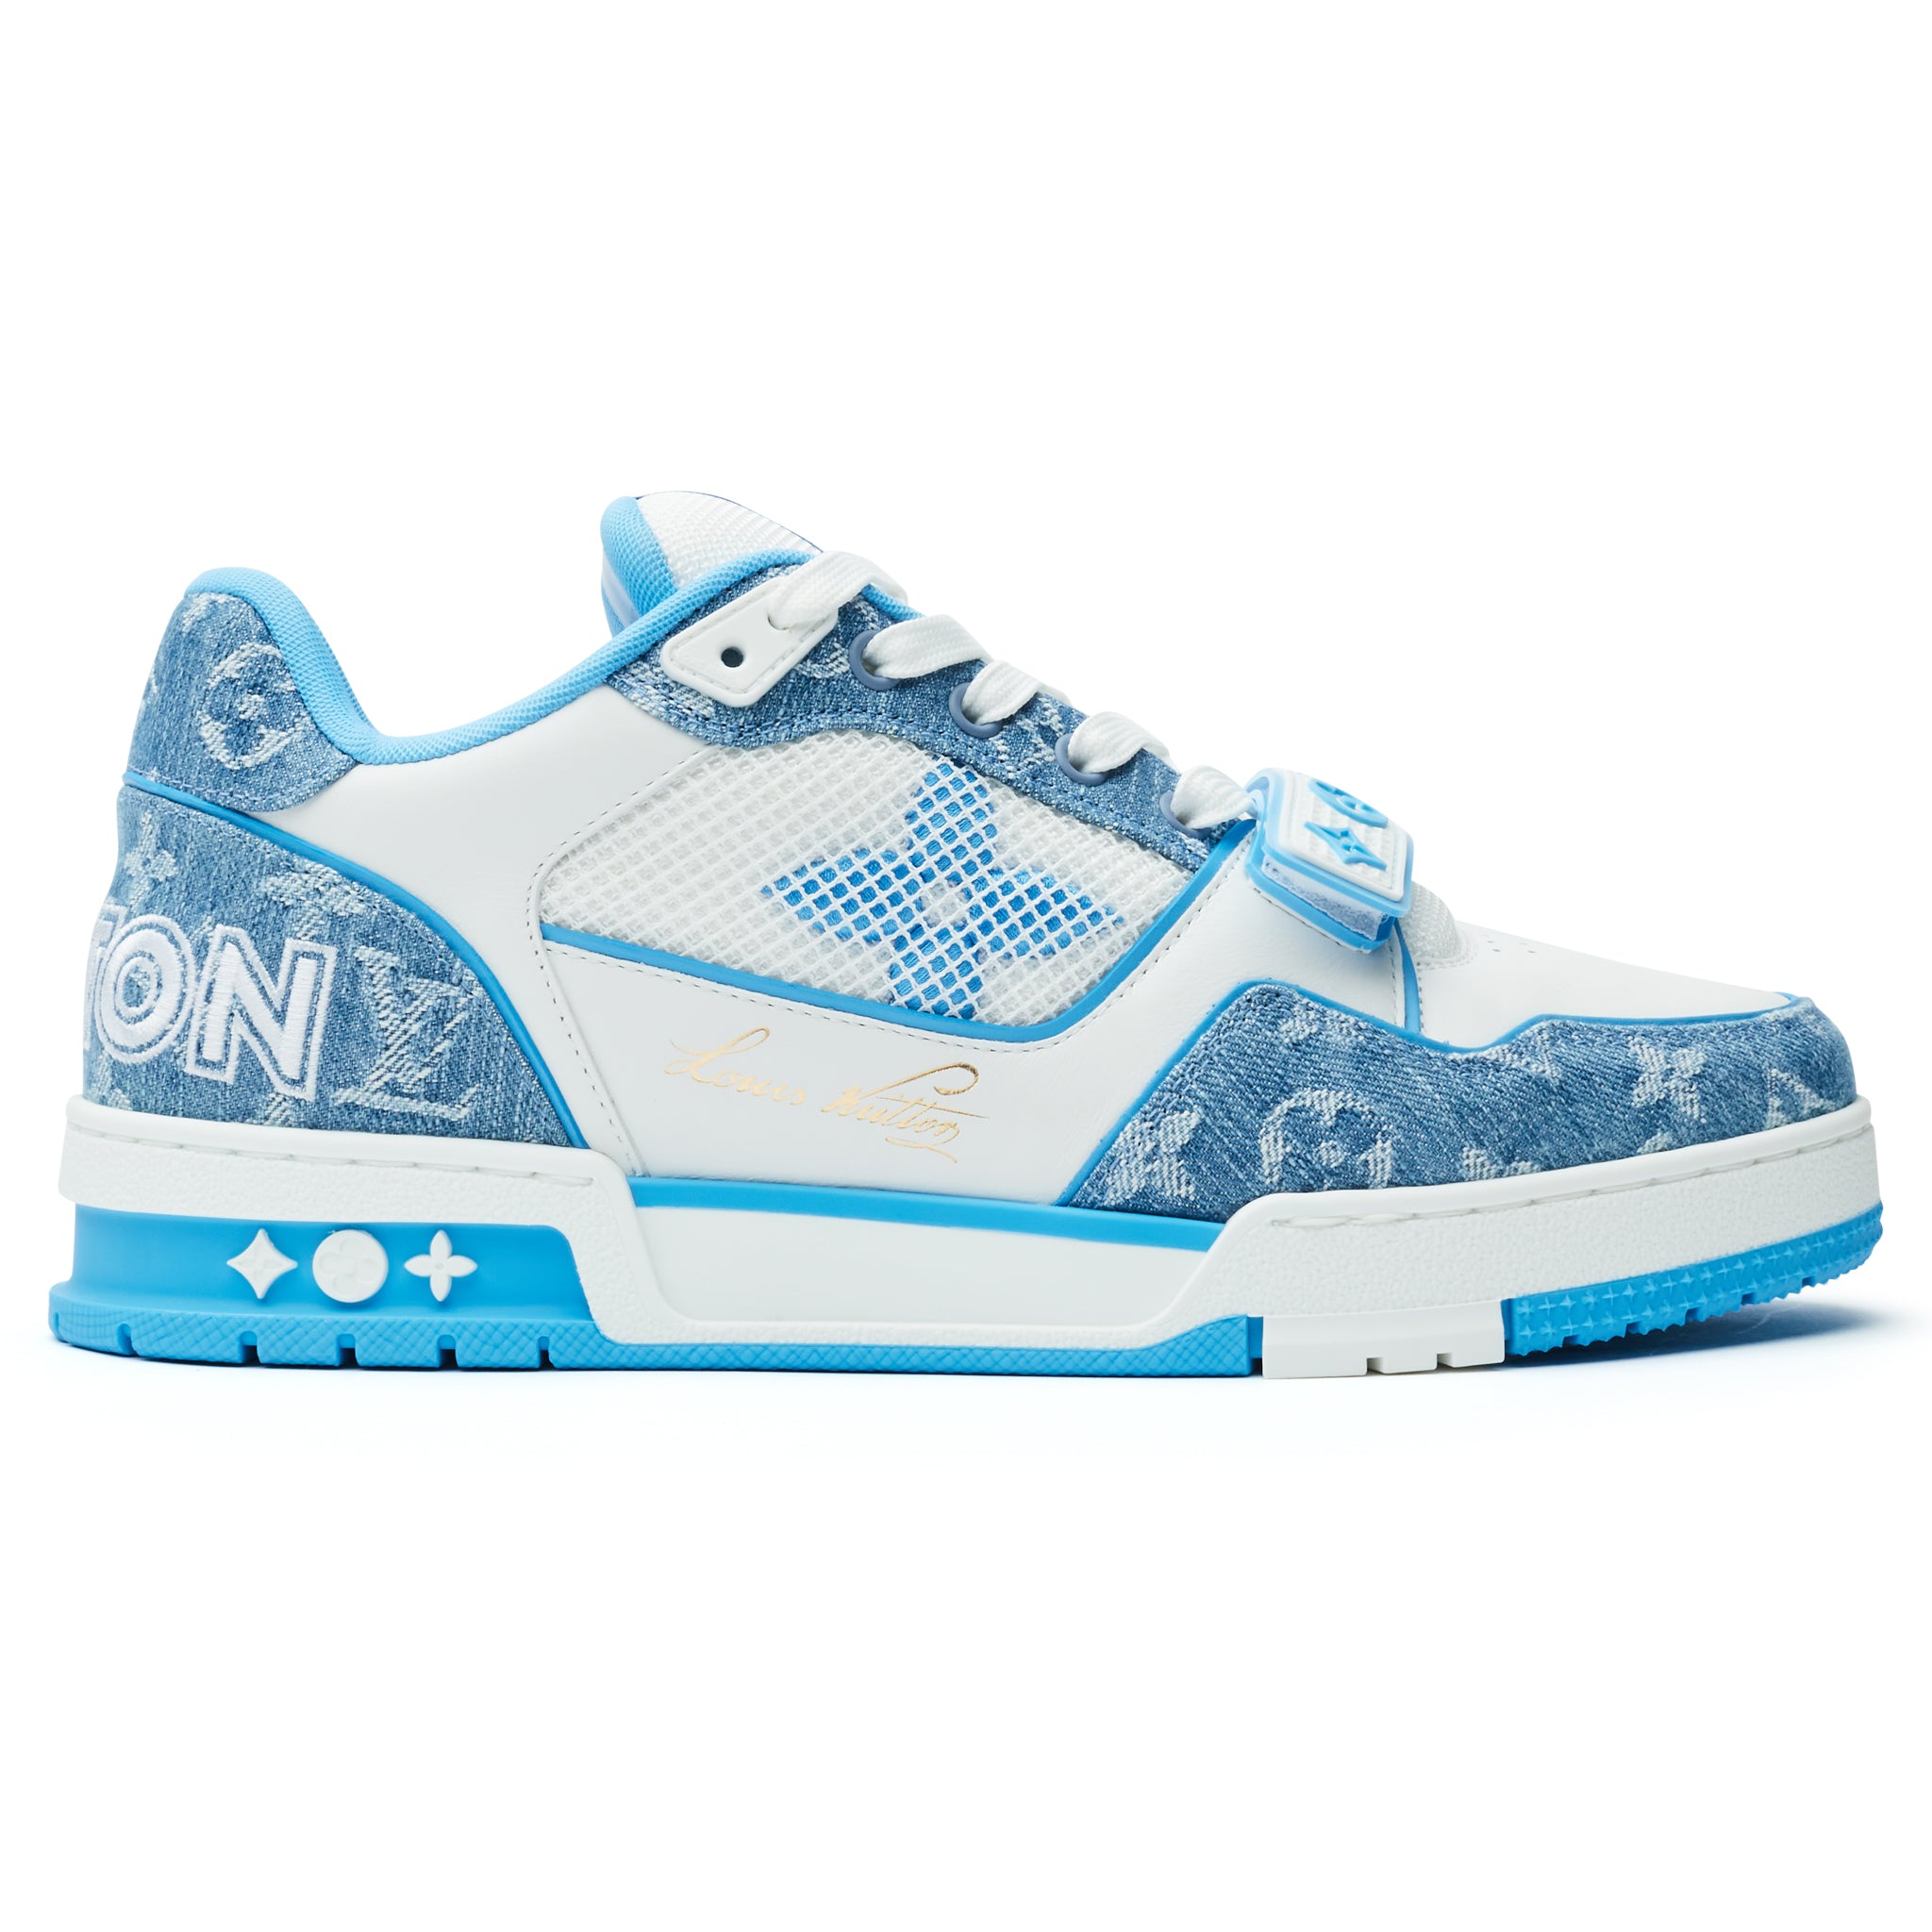 Louis Vuitton LV Skate Sneaker Blue White : r/ShopRepshoes